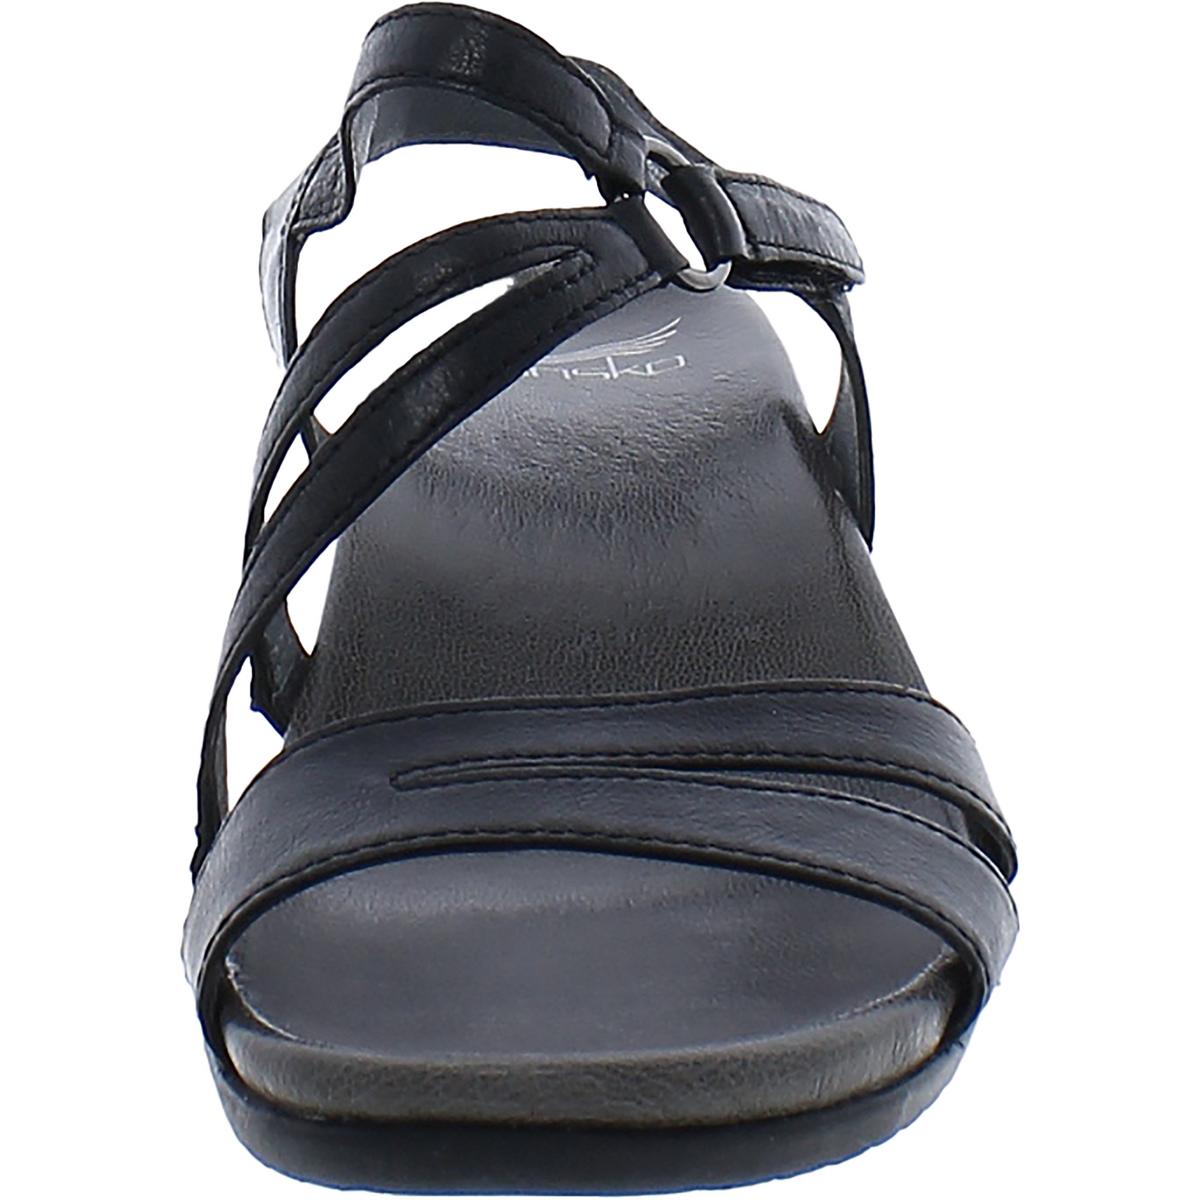 DANSKO Addyson Womens Leather Ankle Wedge Sandals